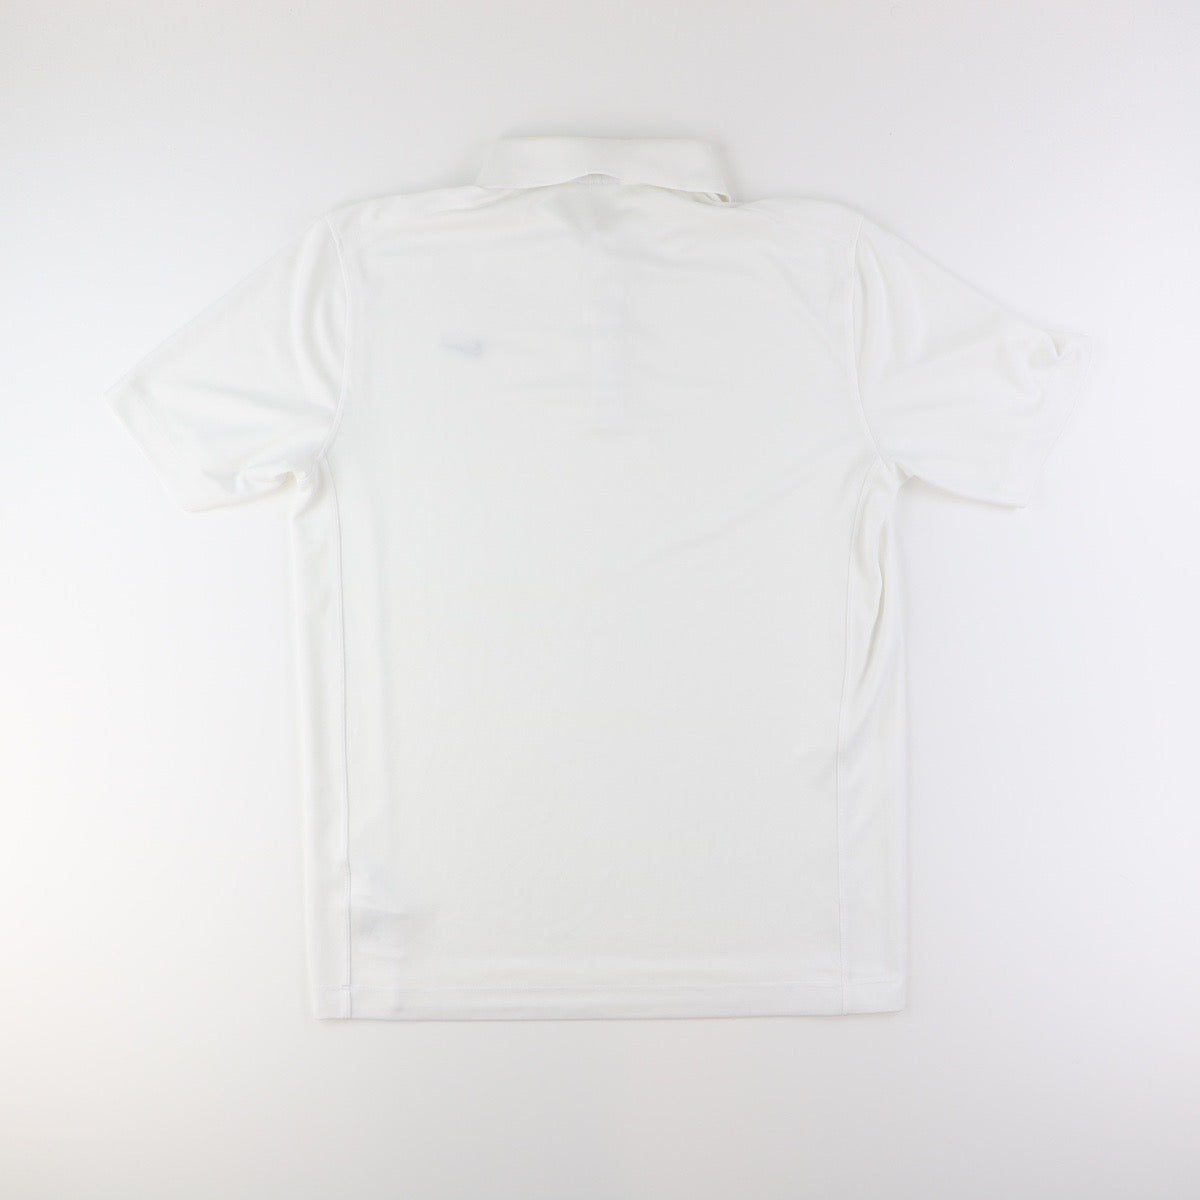 Nike Polo Shirt (M)